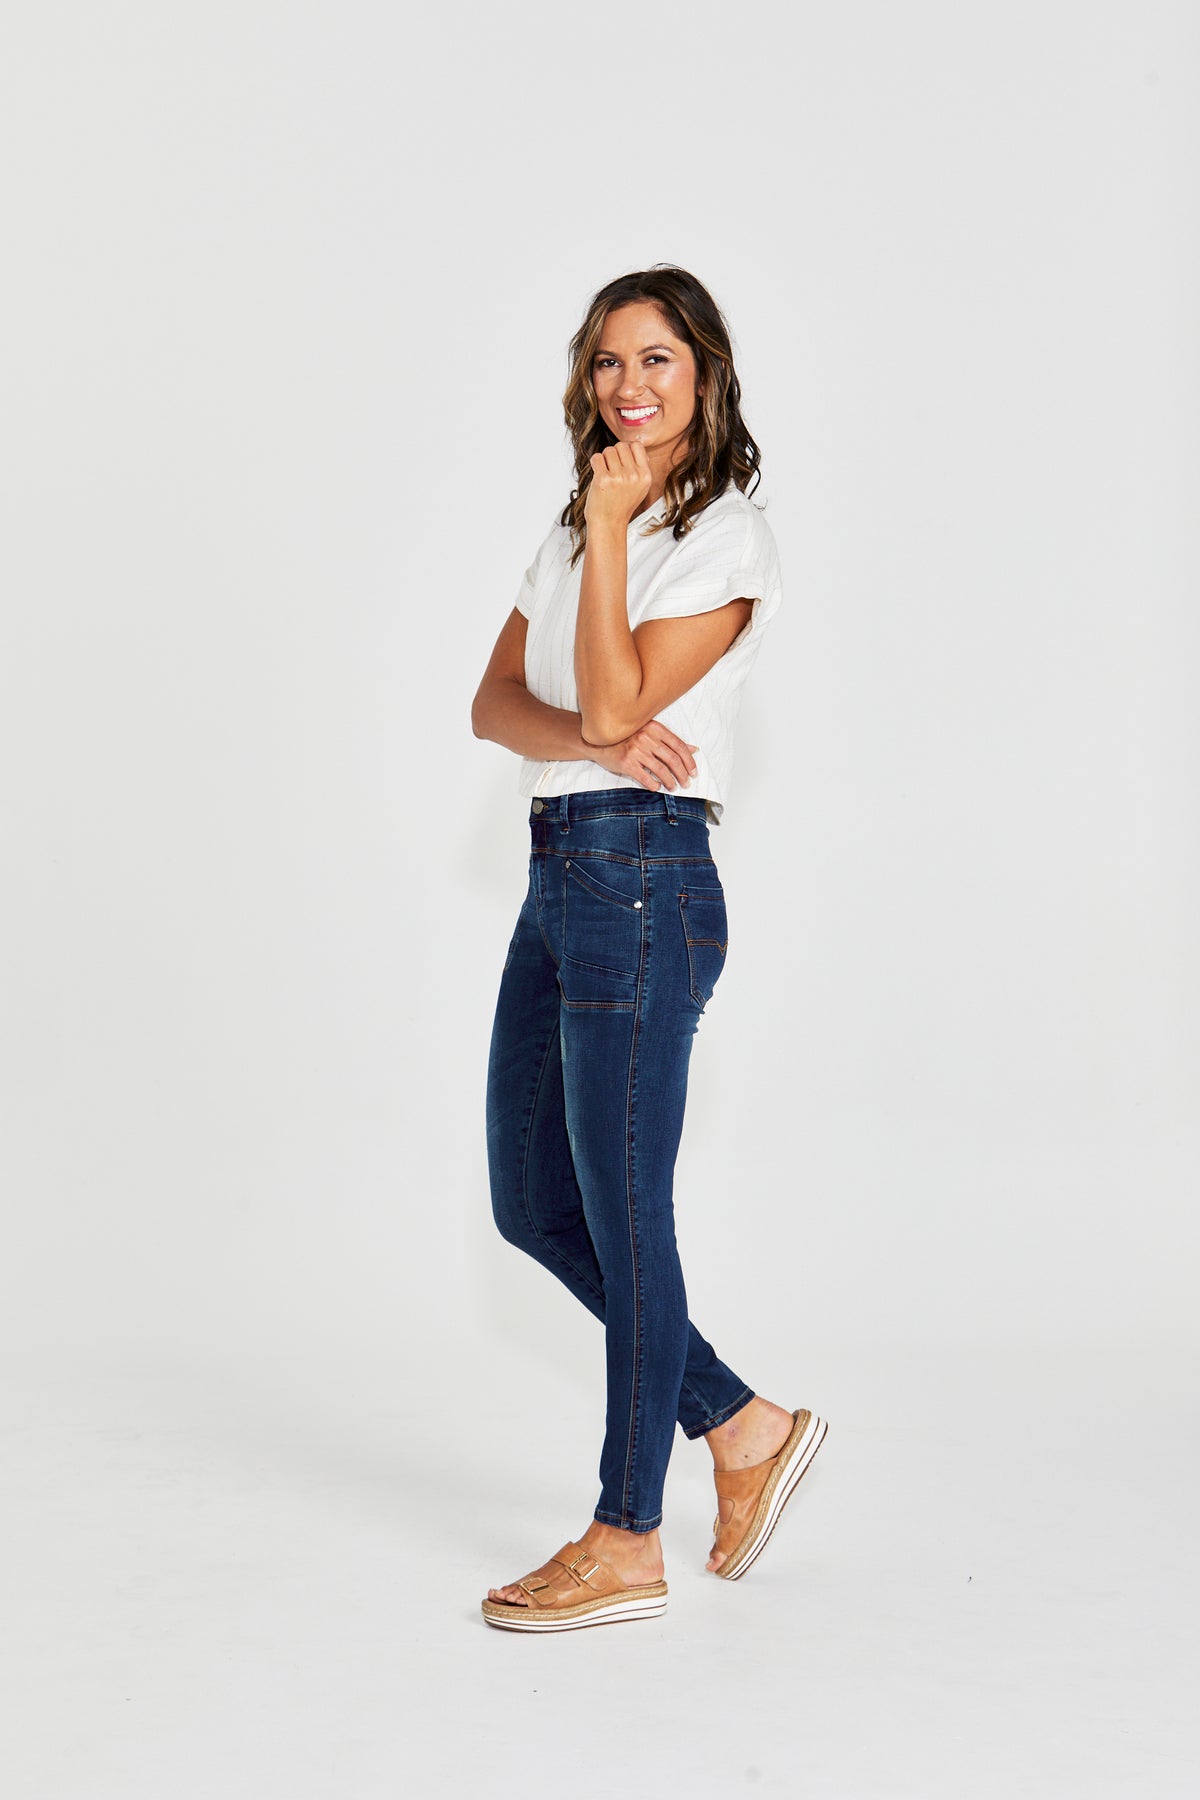 New London Jeans  - Pinner Slim Jean - Indigo